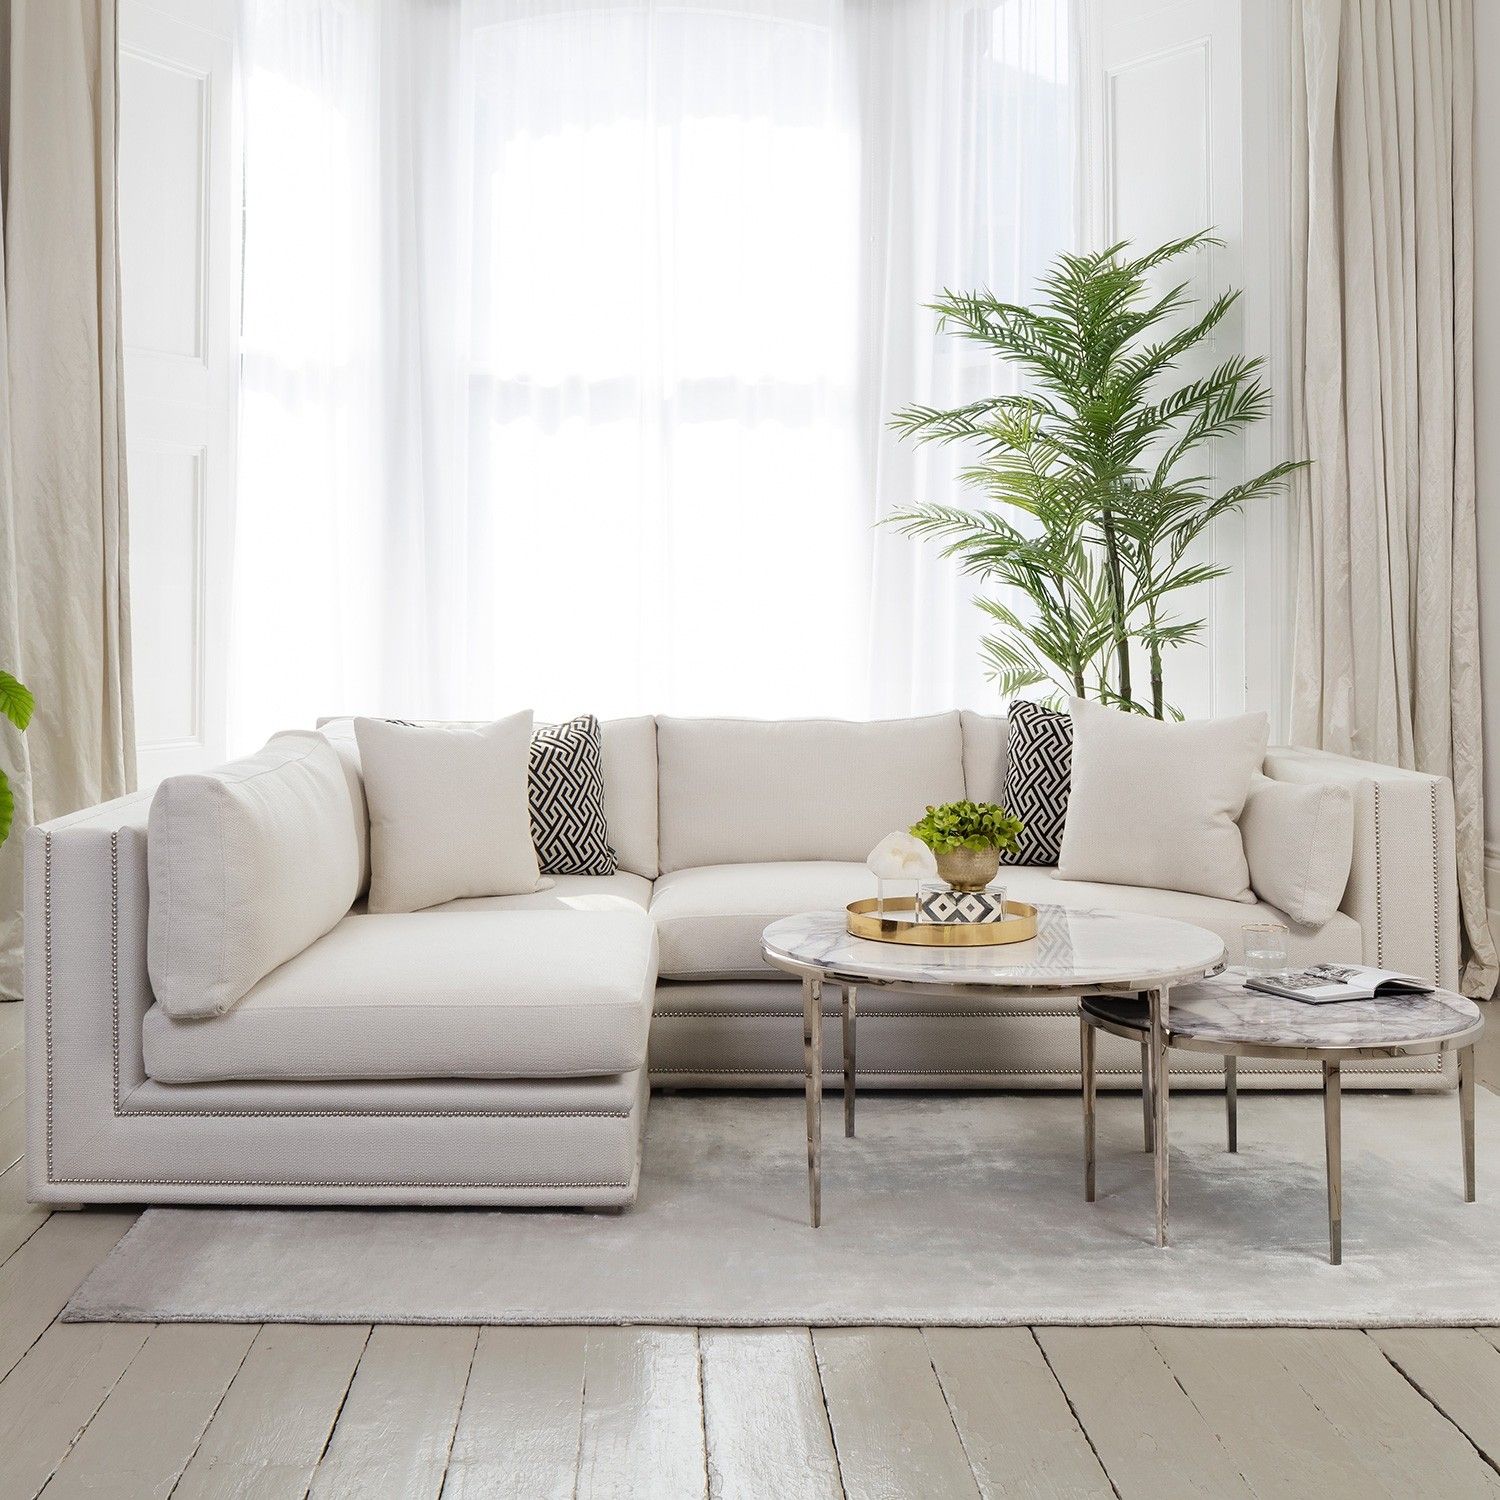 a luxurious natural-toned sofa